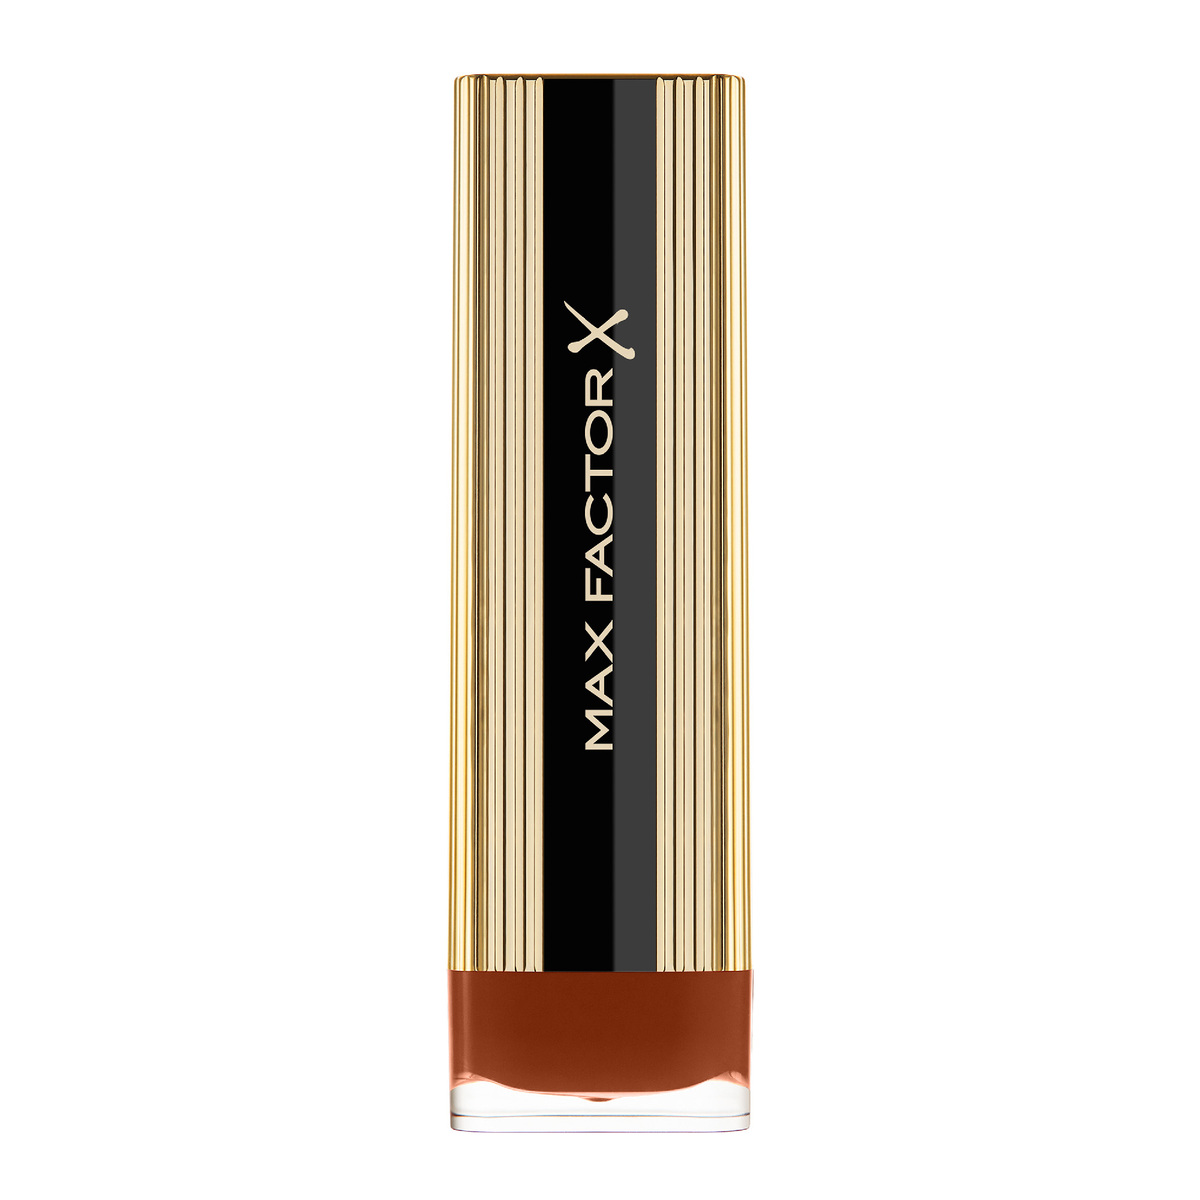 Max Factor Lipstick Color Elixir Rich Mocha 140 1pc